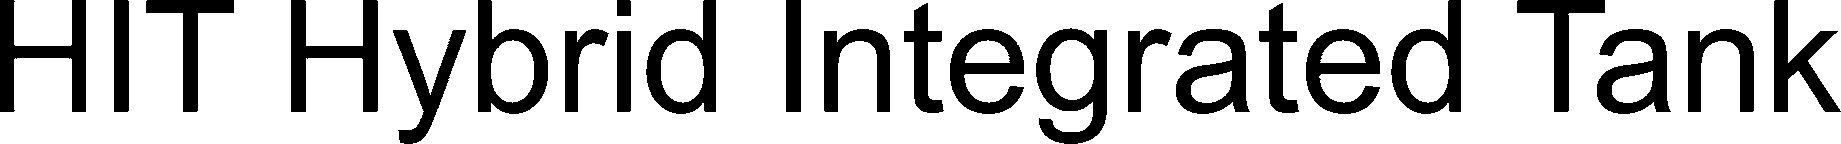 Trademark Logo HIT HYBRID INTEGRATED TANK